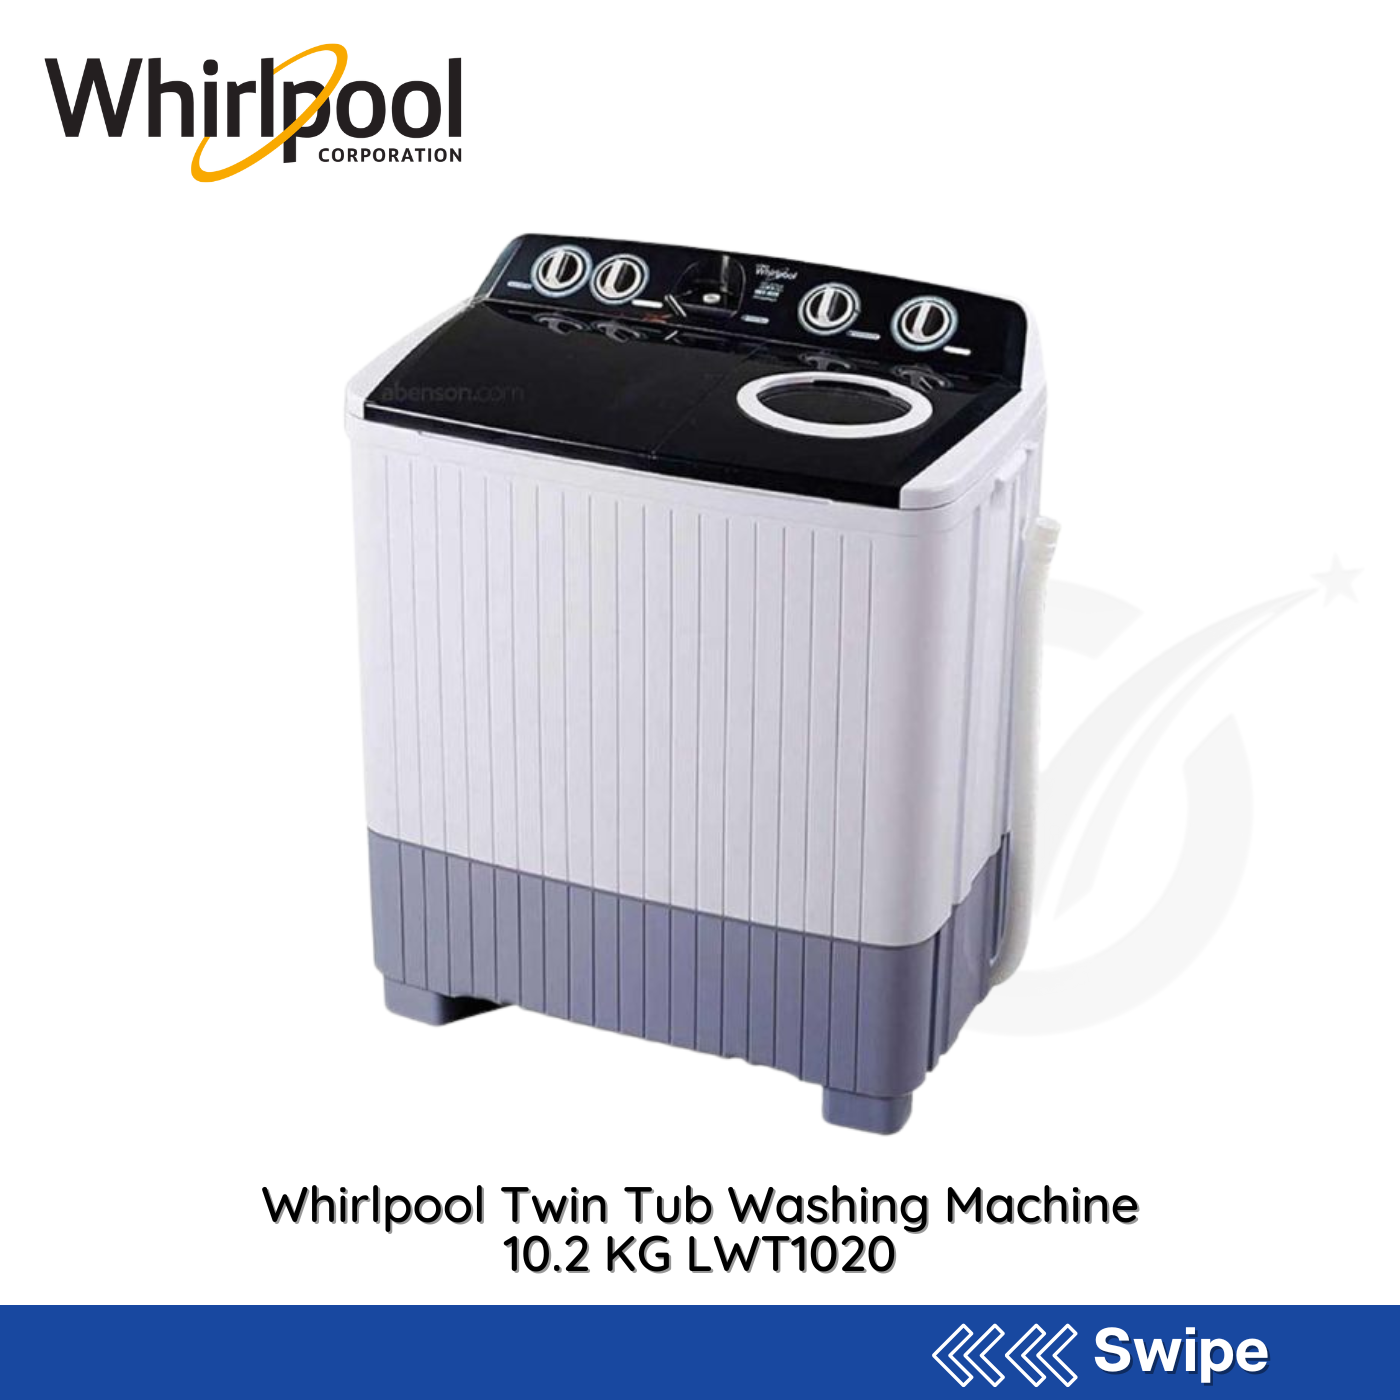 Whirlpool Twin Tub Washing Machine 10.2 KG LWT1020